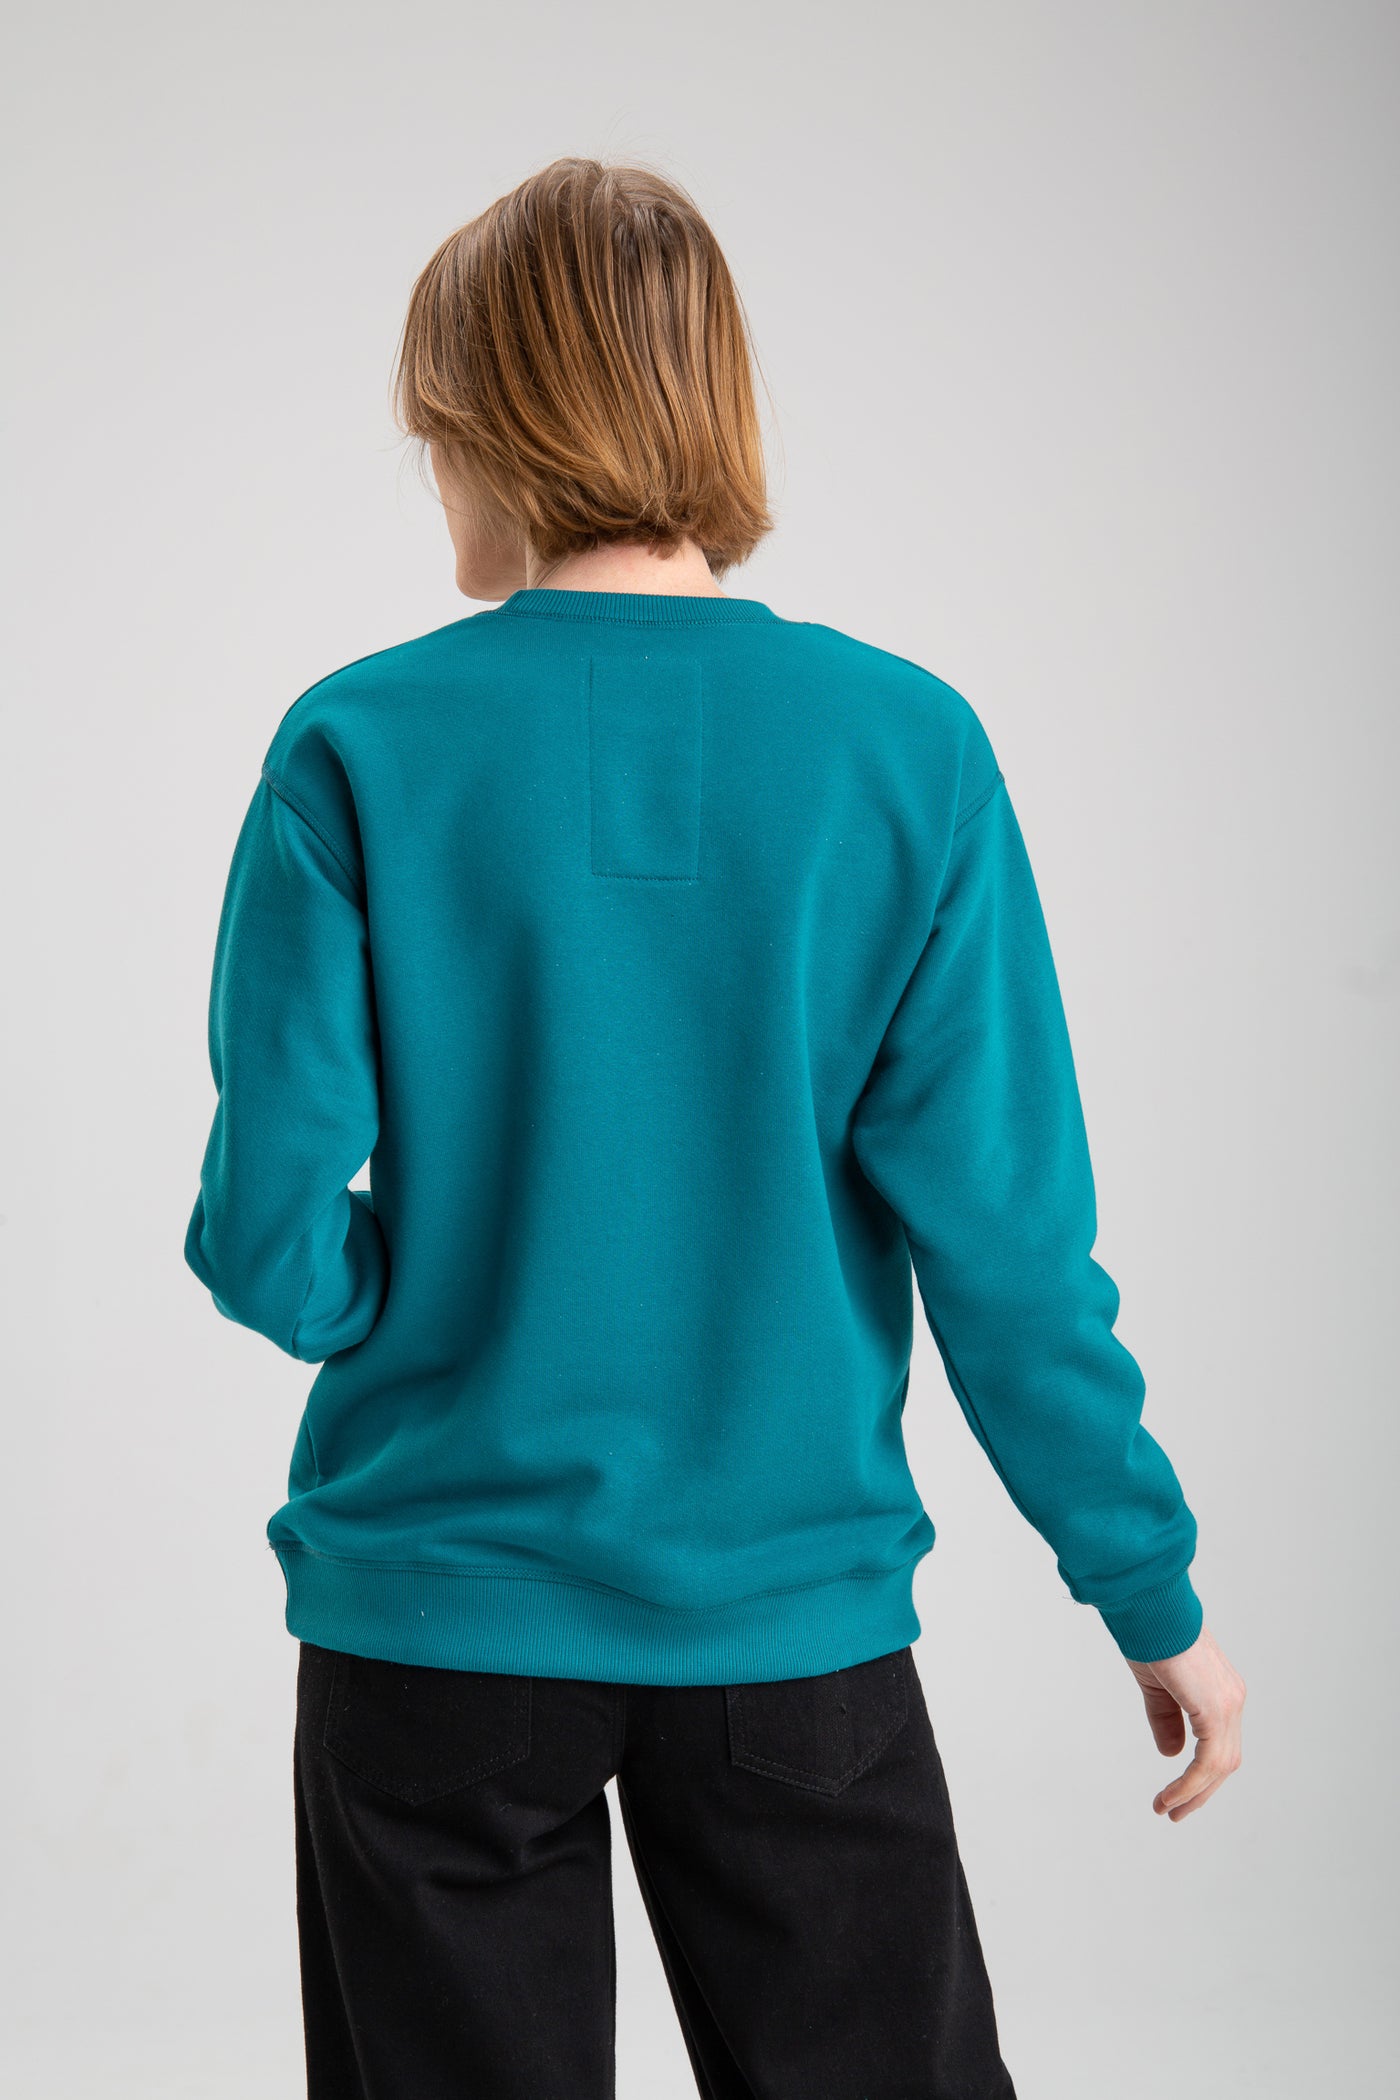 Basic sweatshirt for women | Teal Green